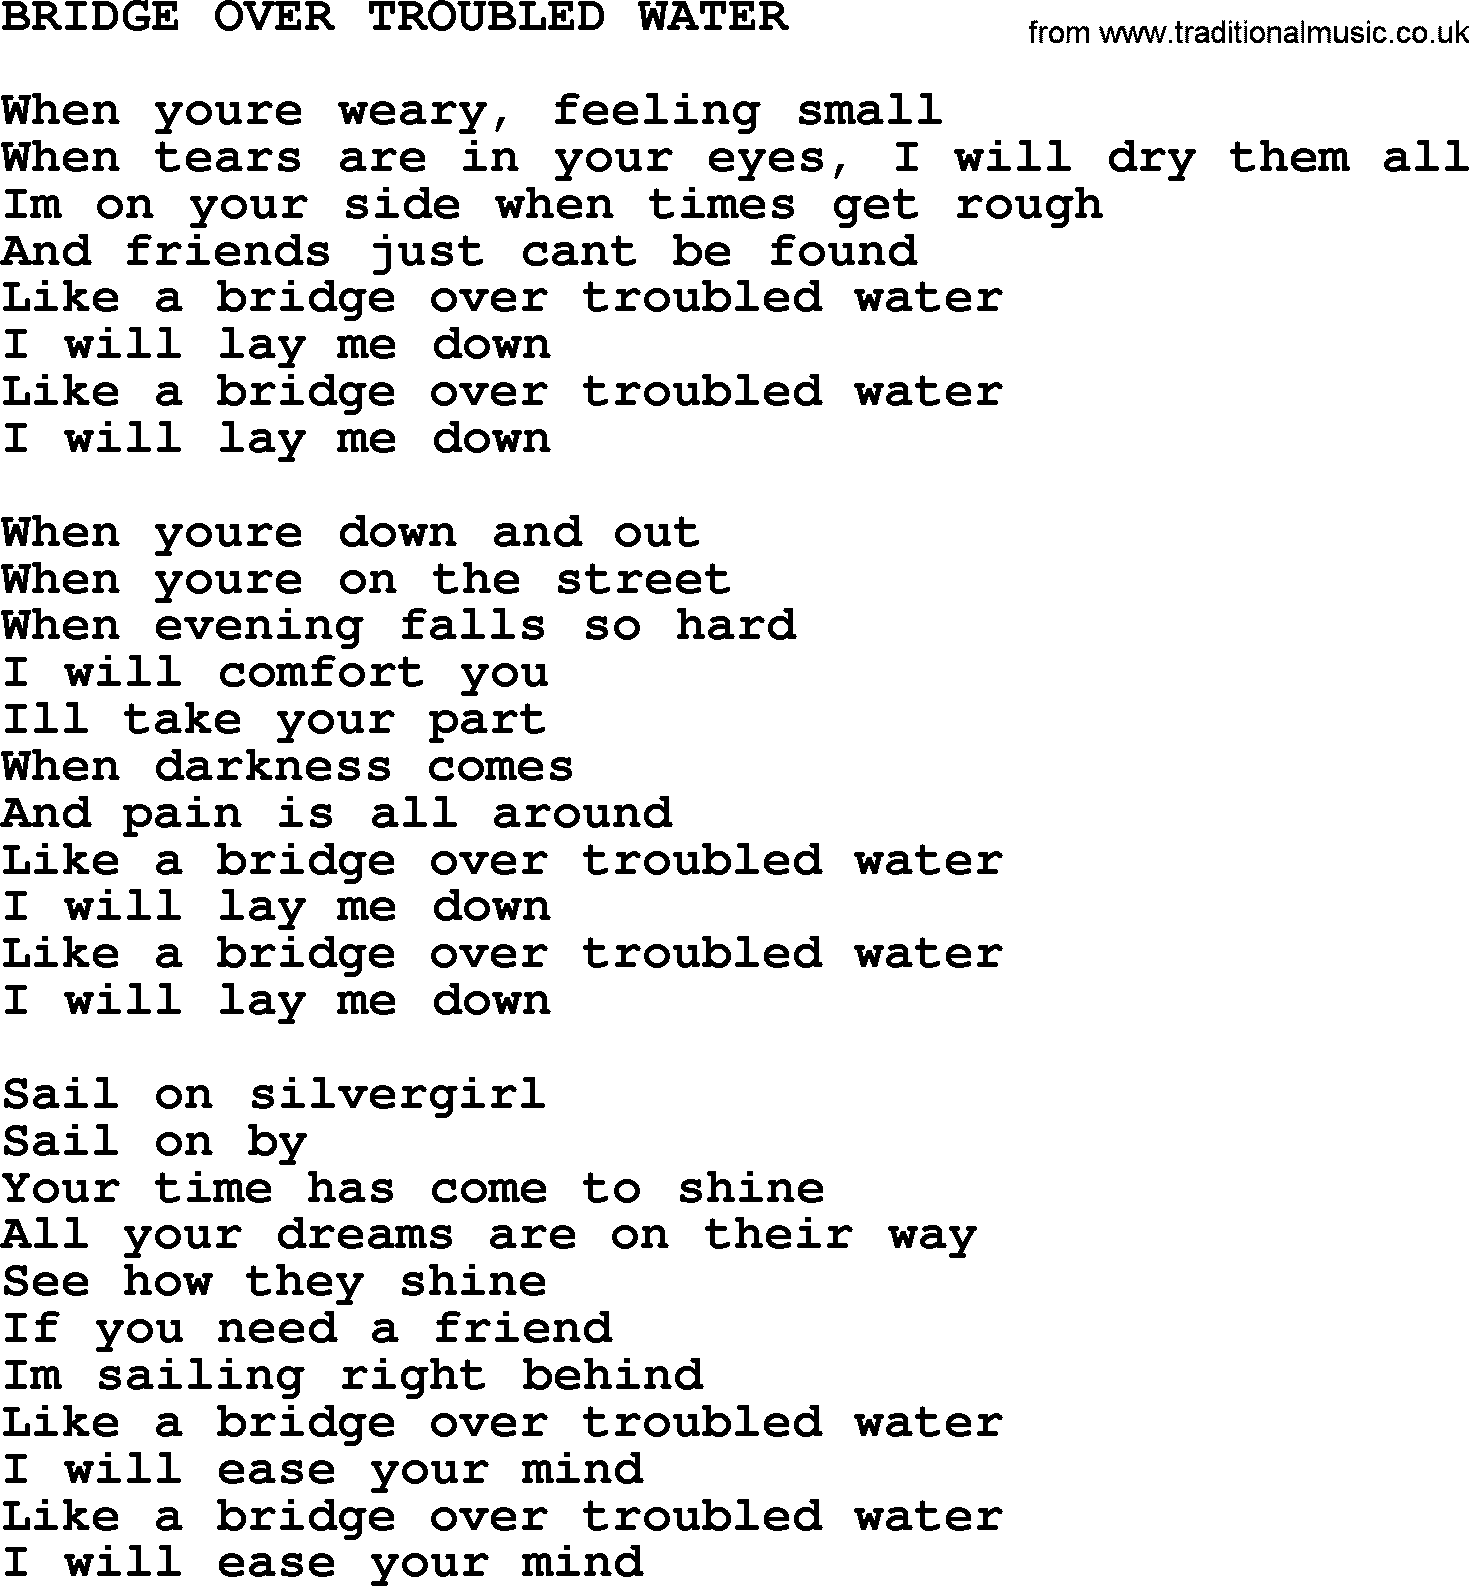 Johnny Cash song Bridge Over Troubled Water.txt lyrics